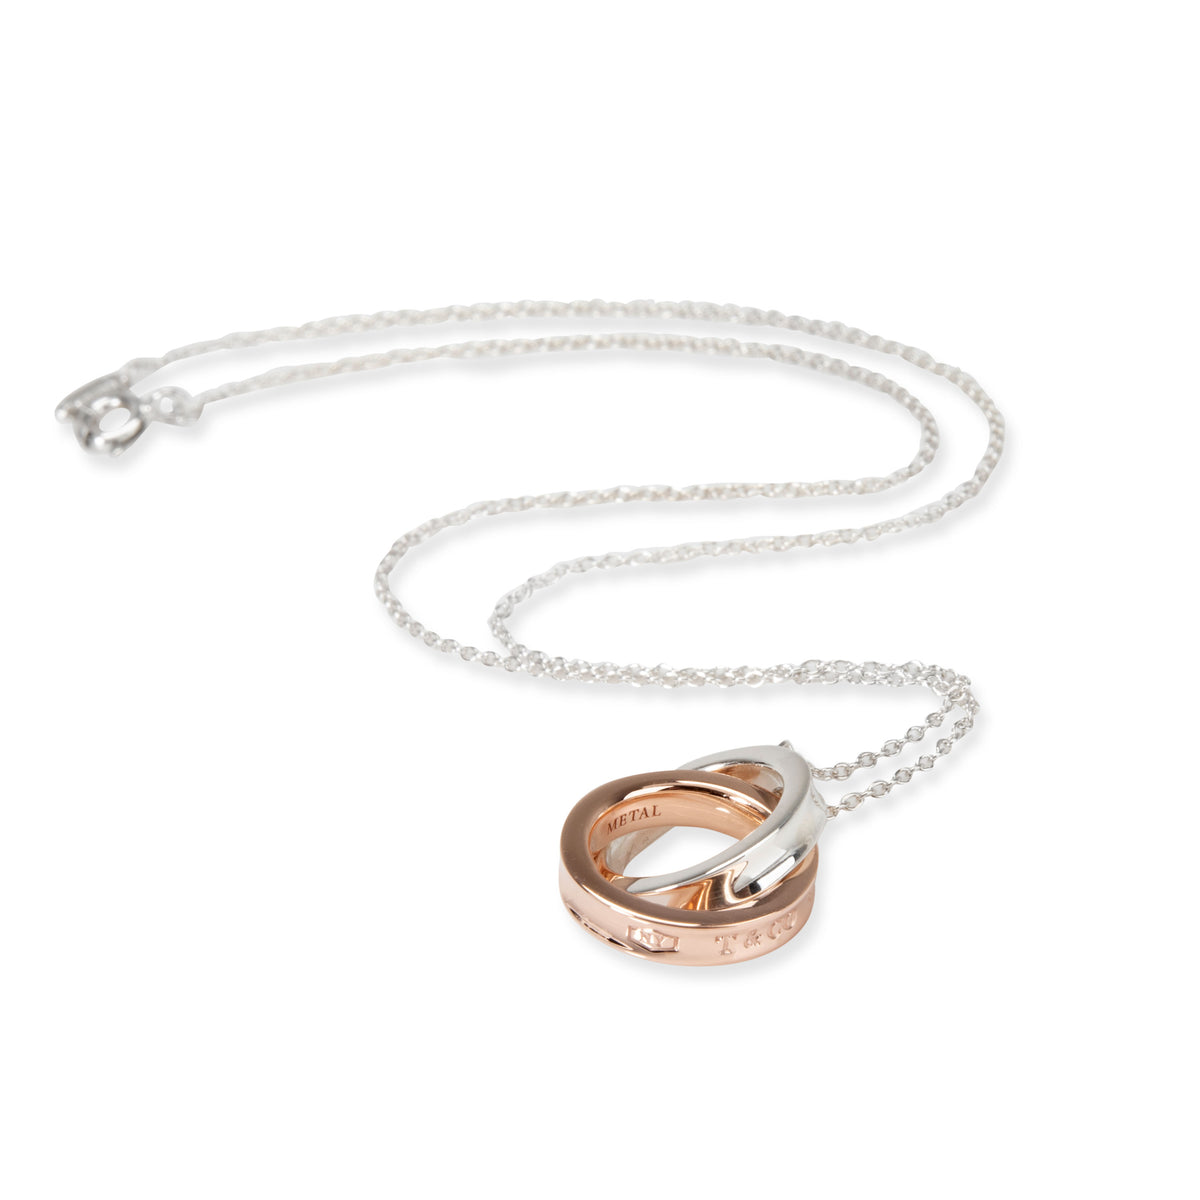 Tiffany & Co. 1837 Interlocking Necklace in Sterling Silver & Rubedo